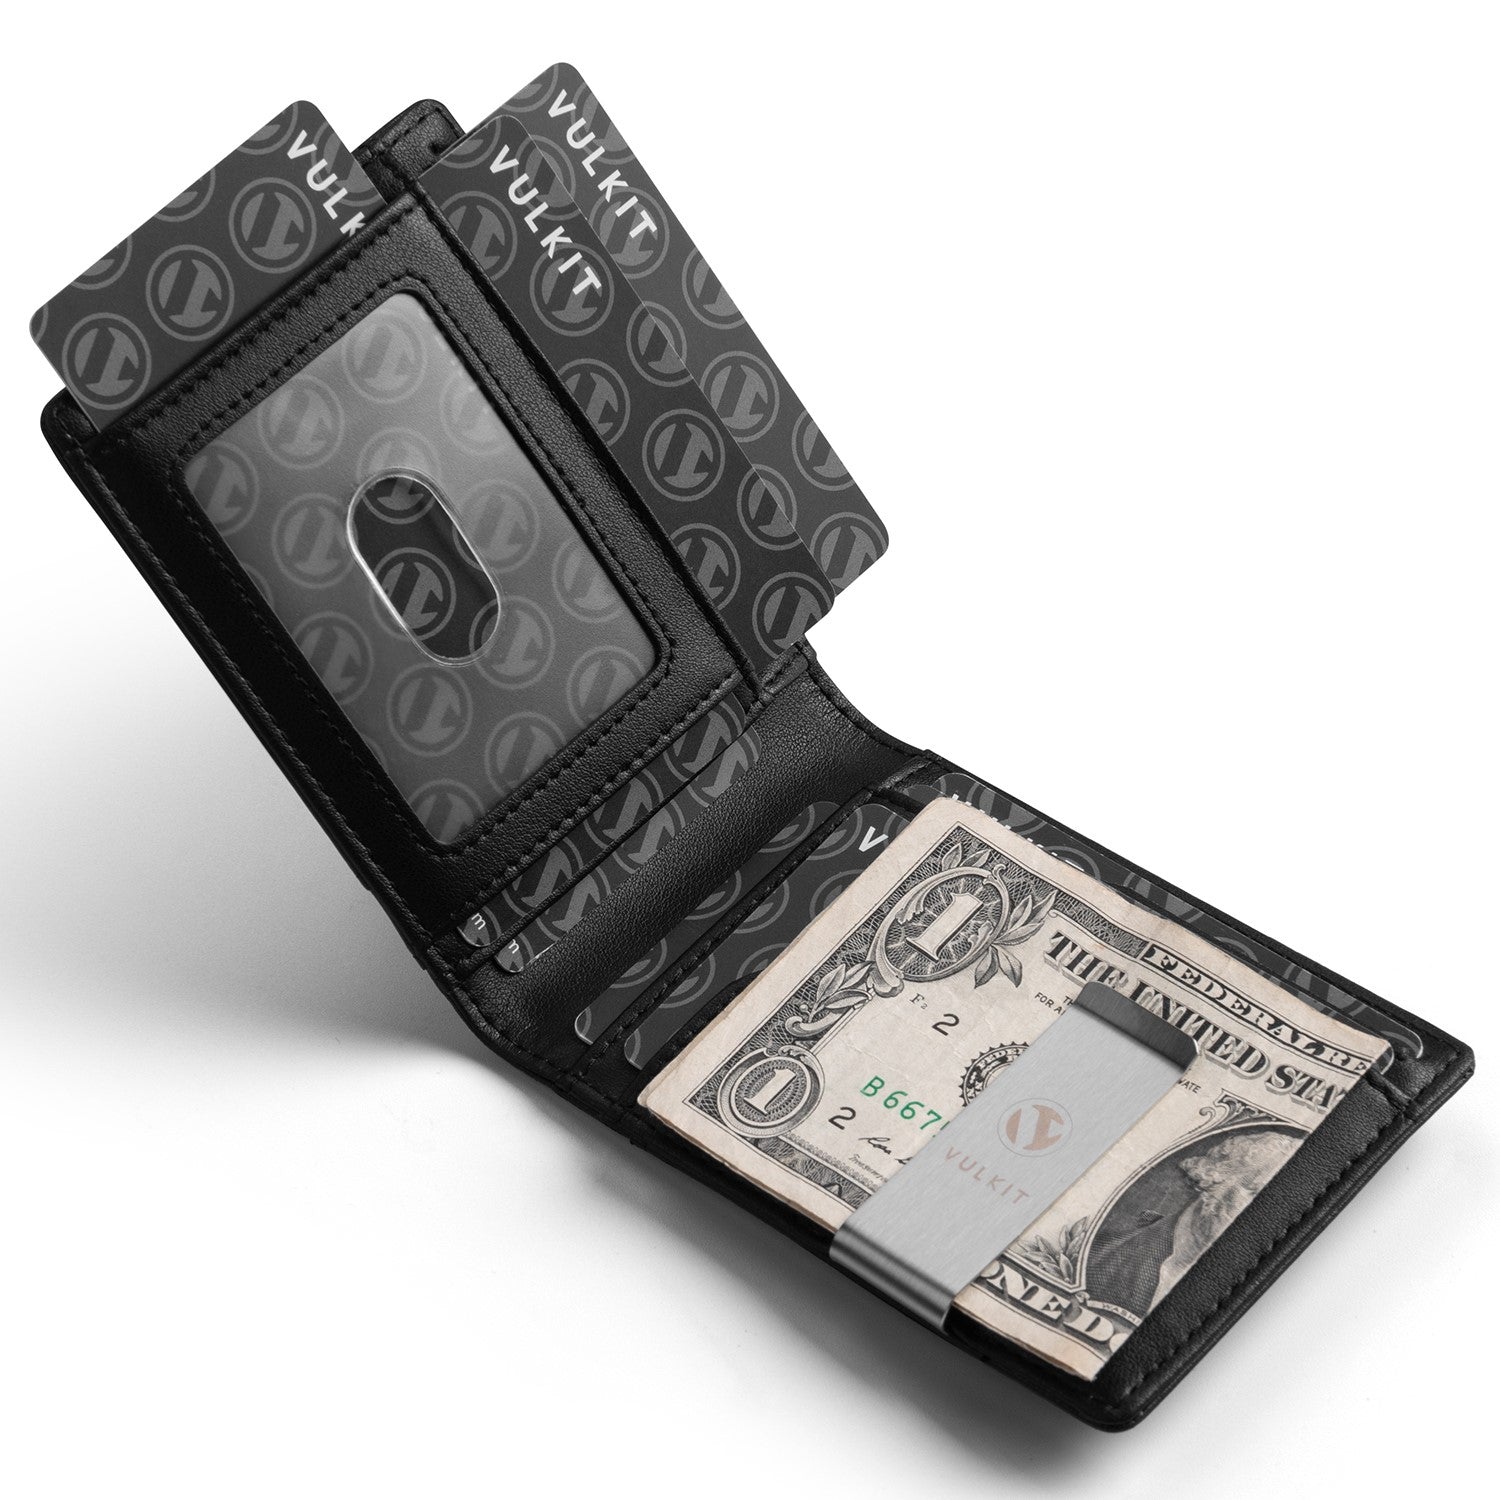 Money Clip Leather Wallet For Men Slim Front Pocket RFID Blocking with  Super Strong Magnetic $14.99